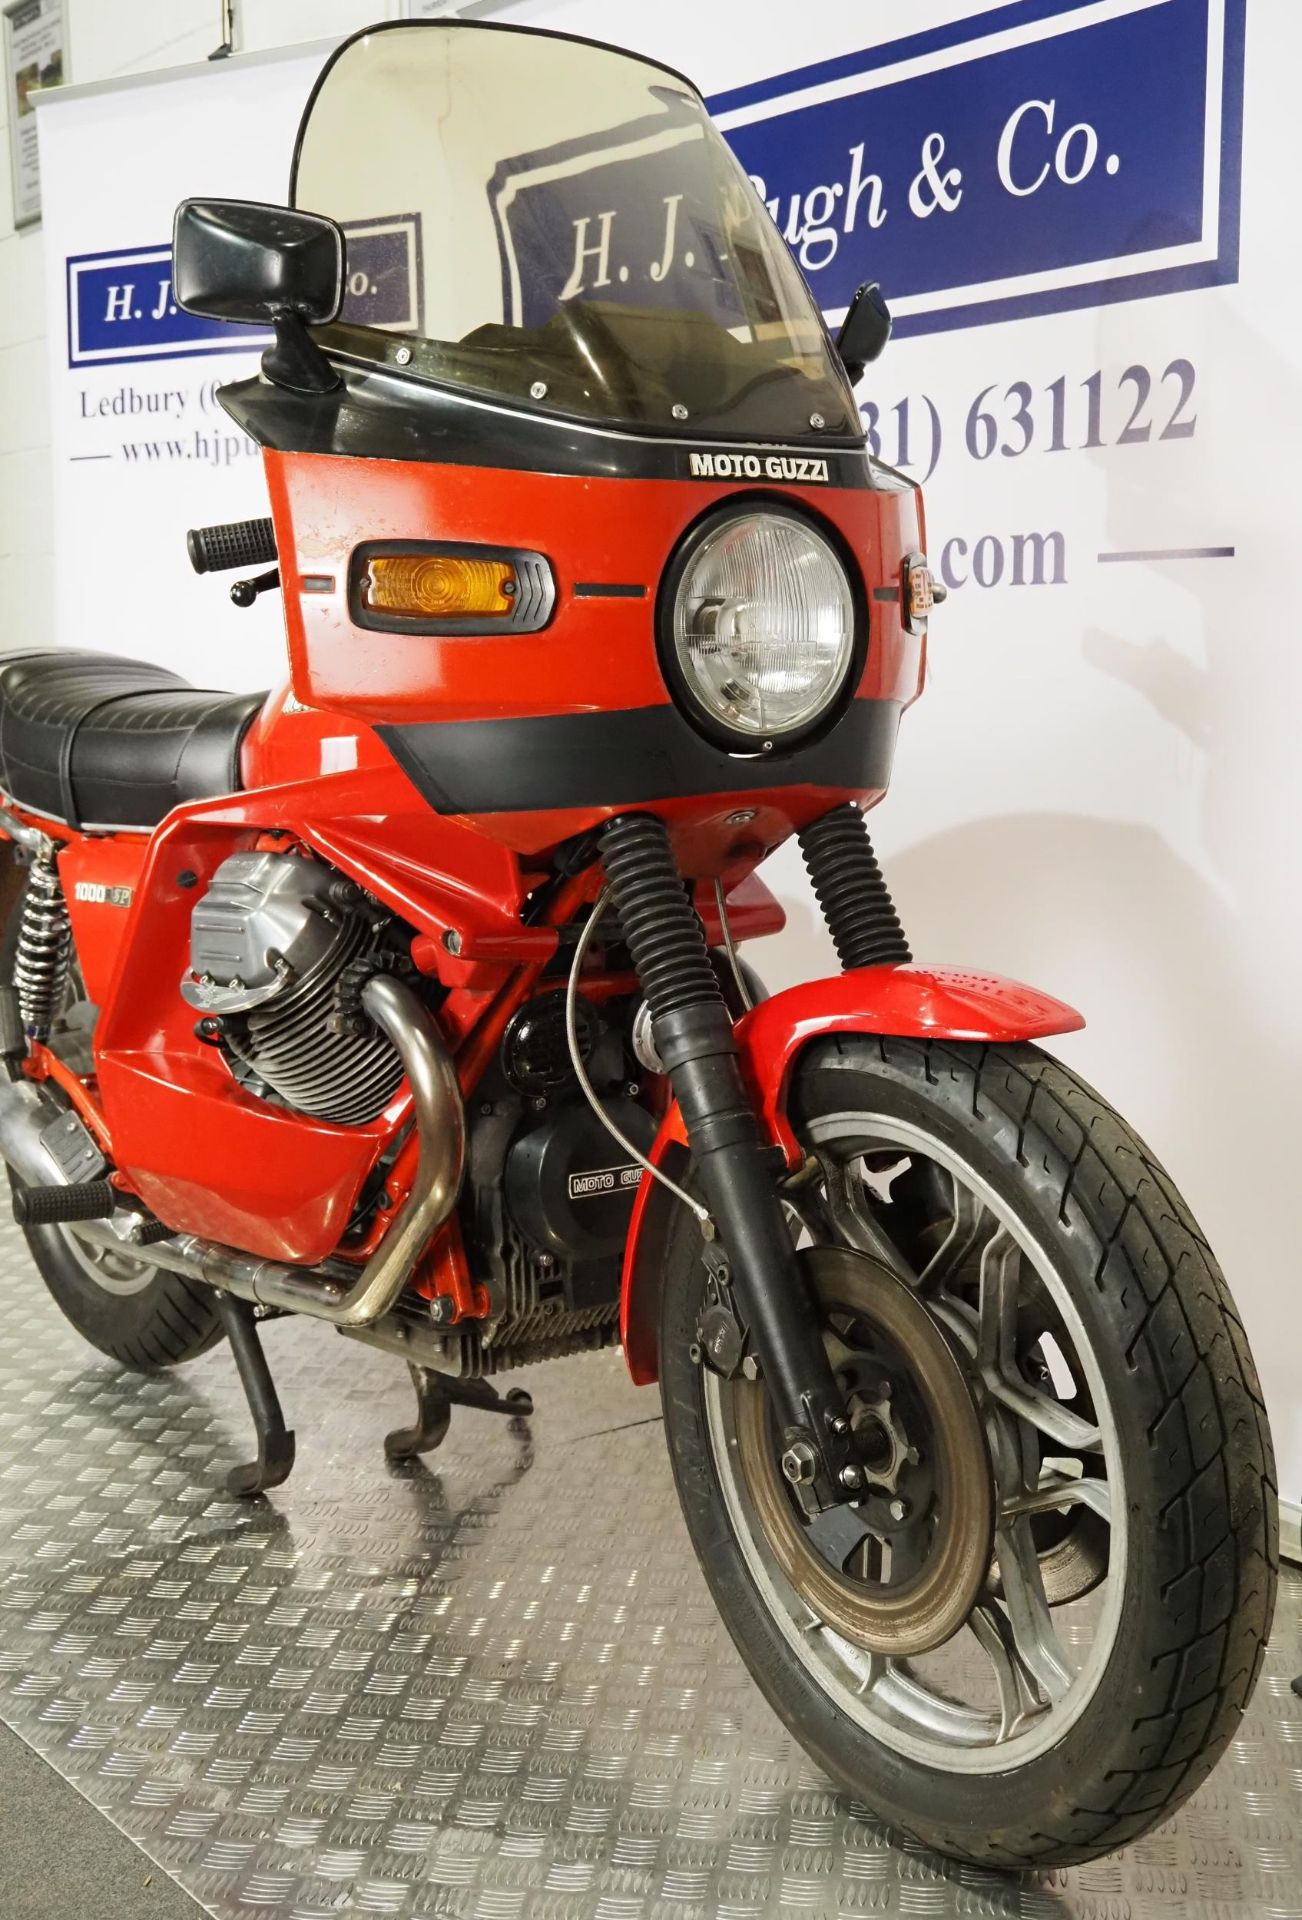 Moto Guzzi SP1000 Spada motorcycle. 1979. 948cc. Frame No. 16634 Runs and rides. Bought from Guzzi - Image 2 of 6